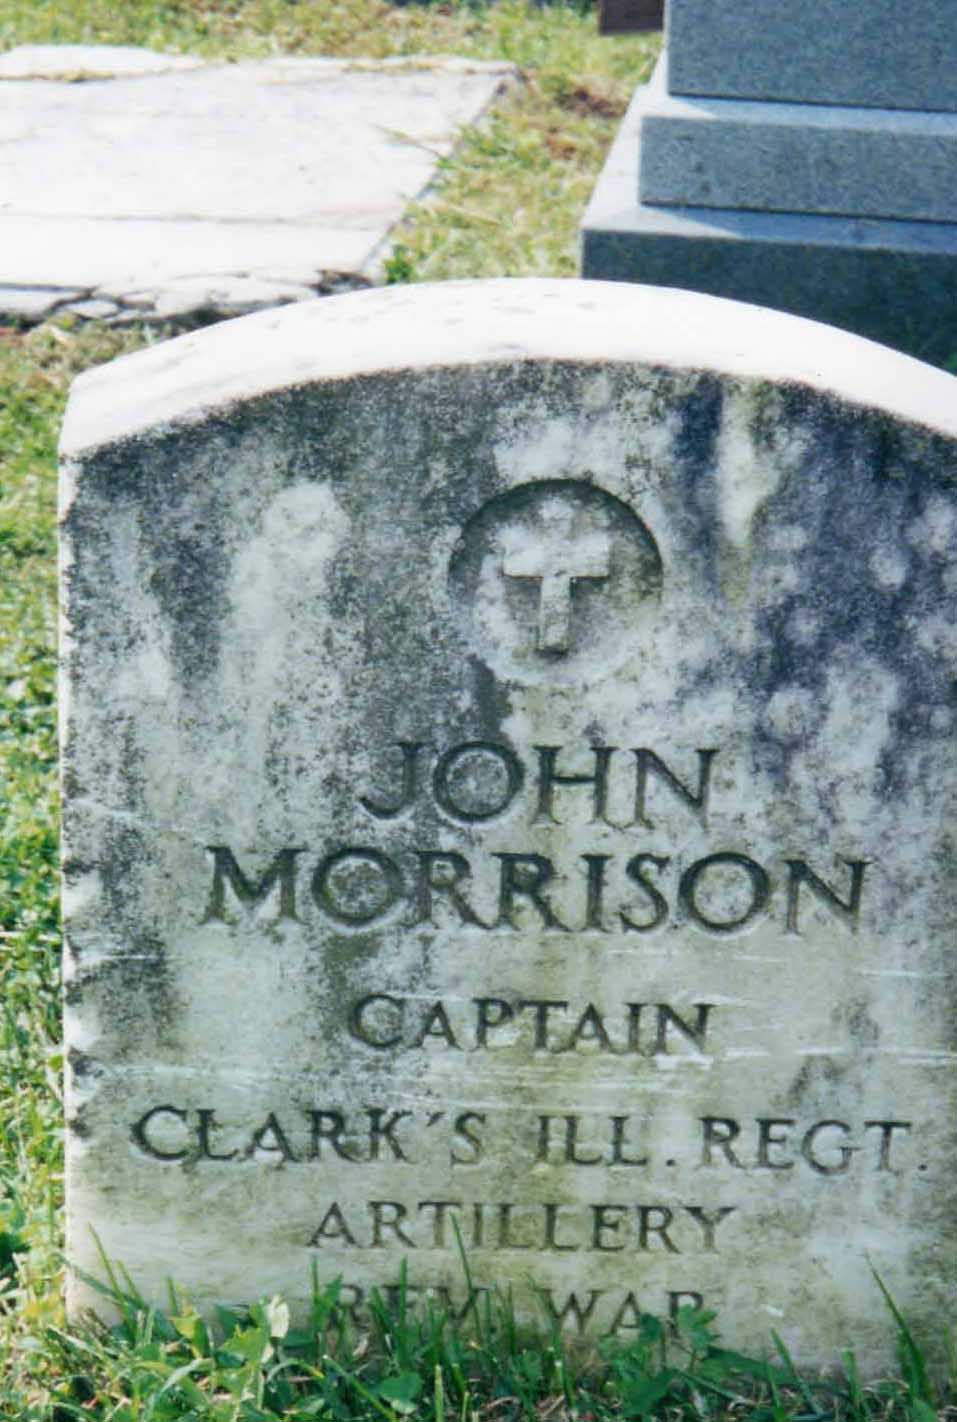 John Morrison Headstone; Revolutionary War Soldier